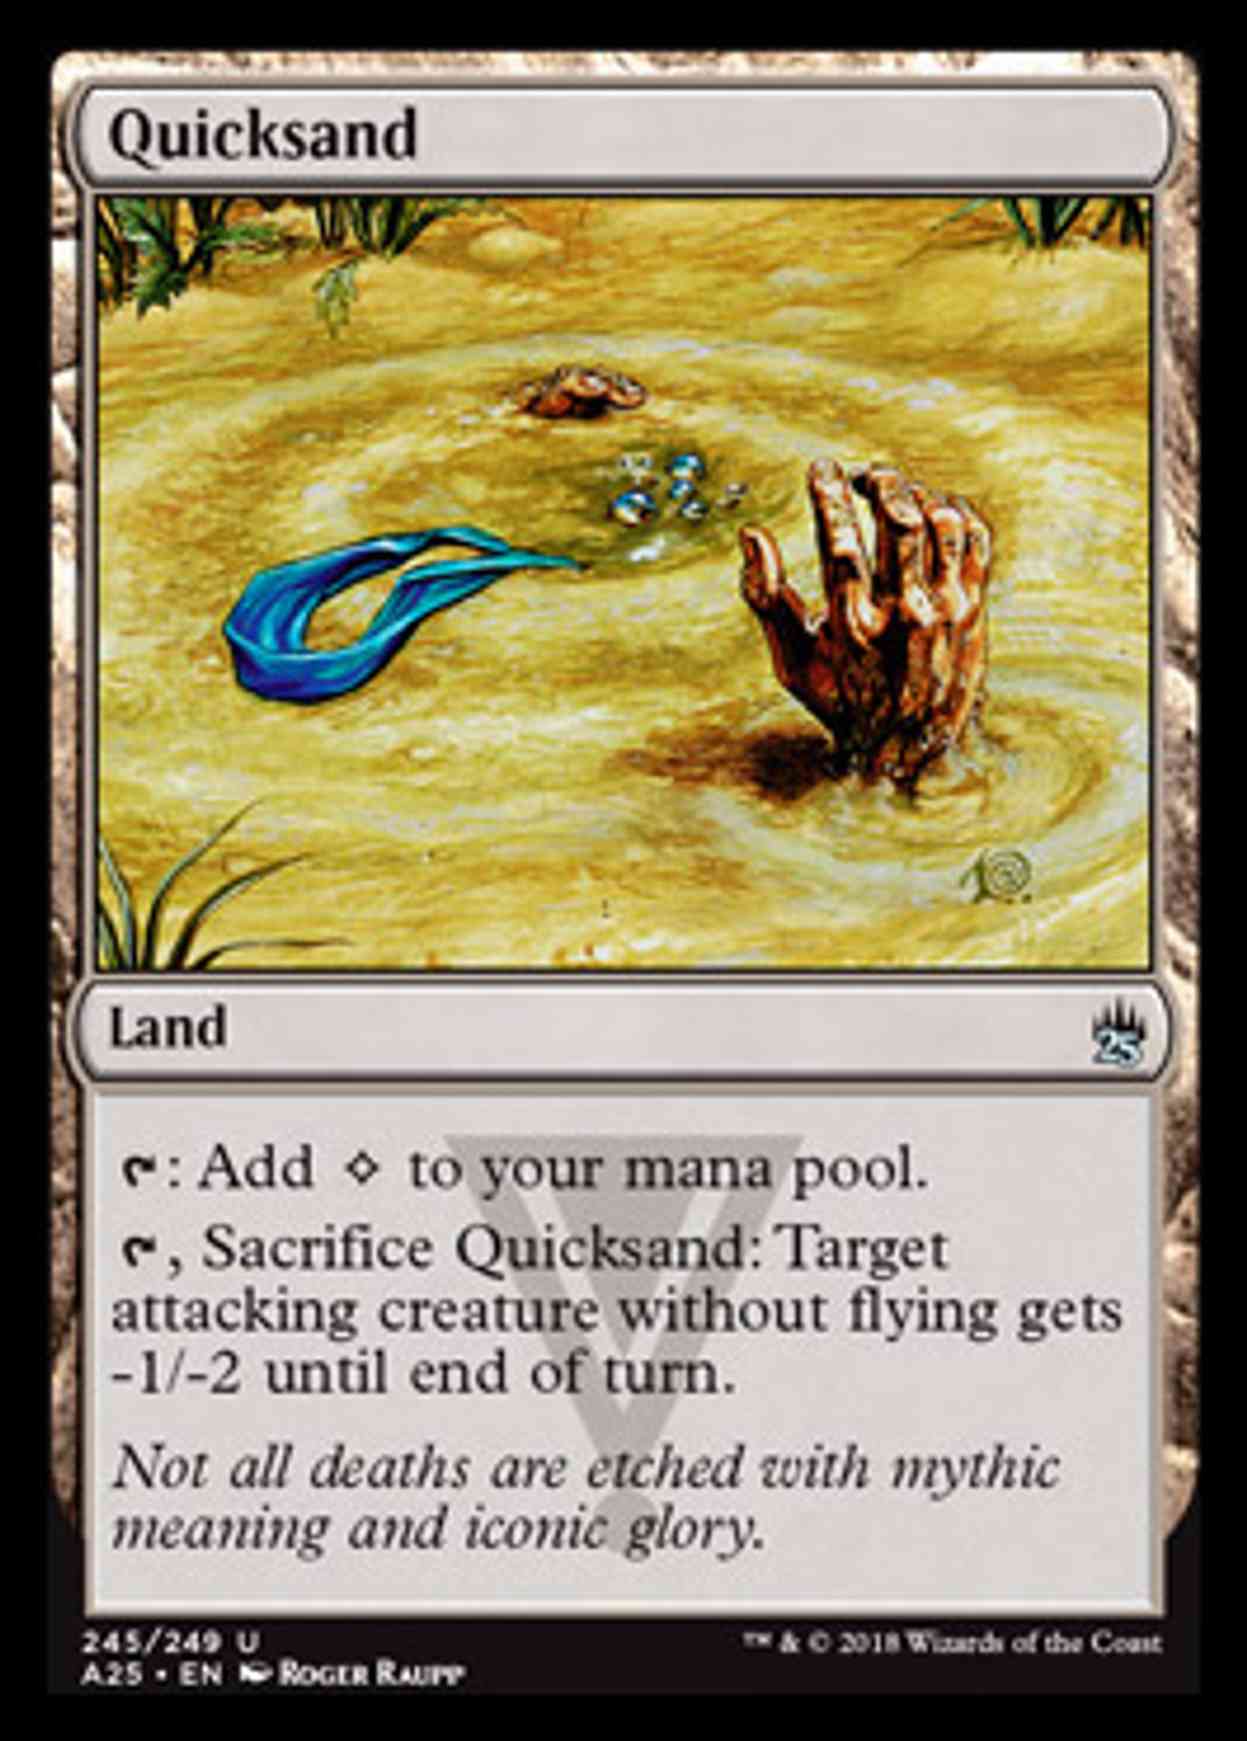 Quicksand magic card front